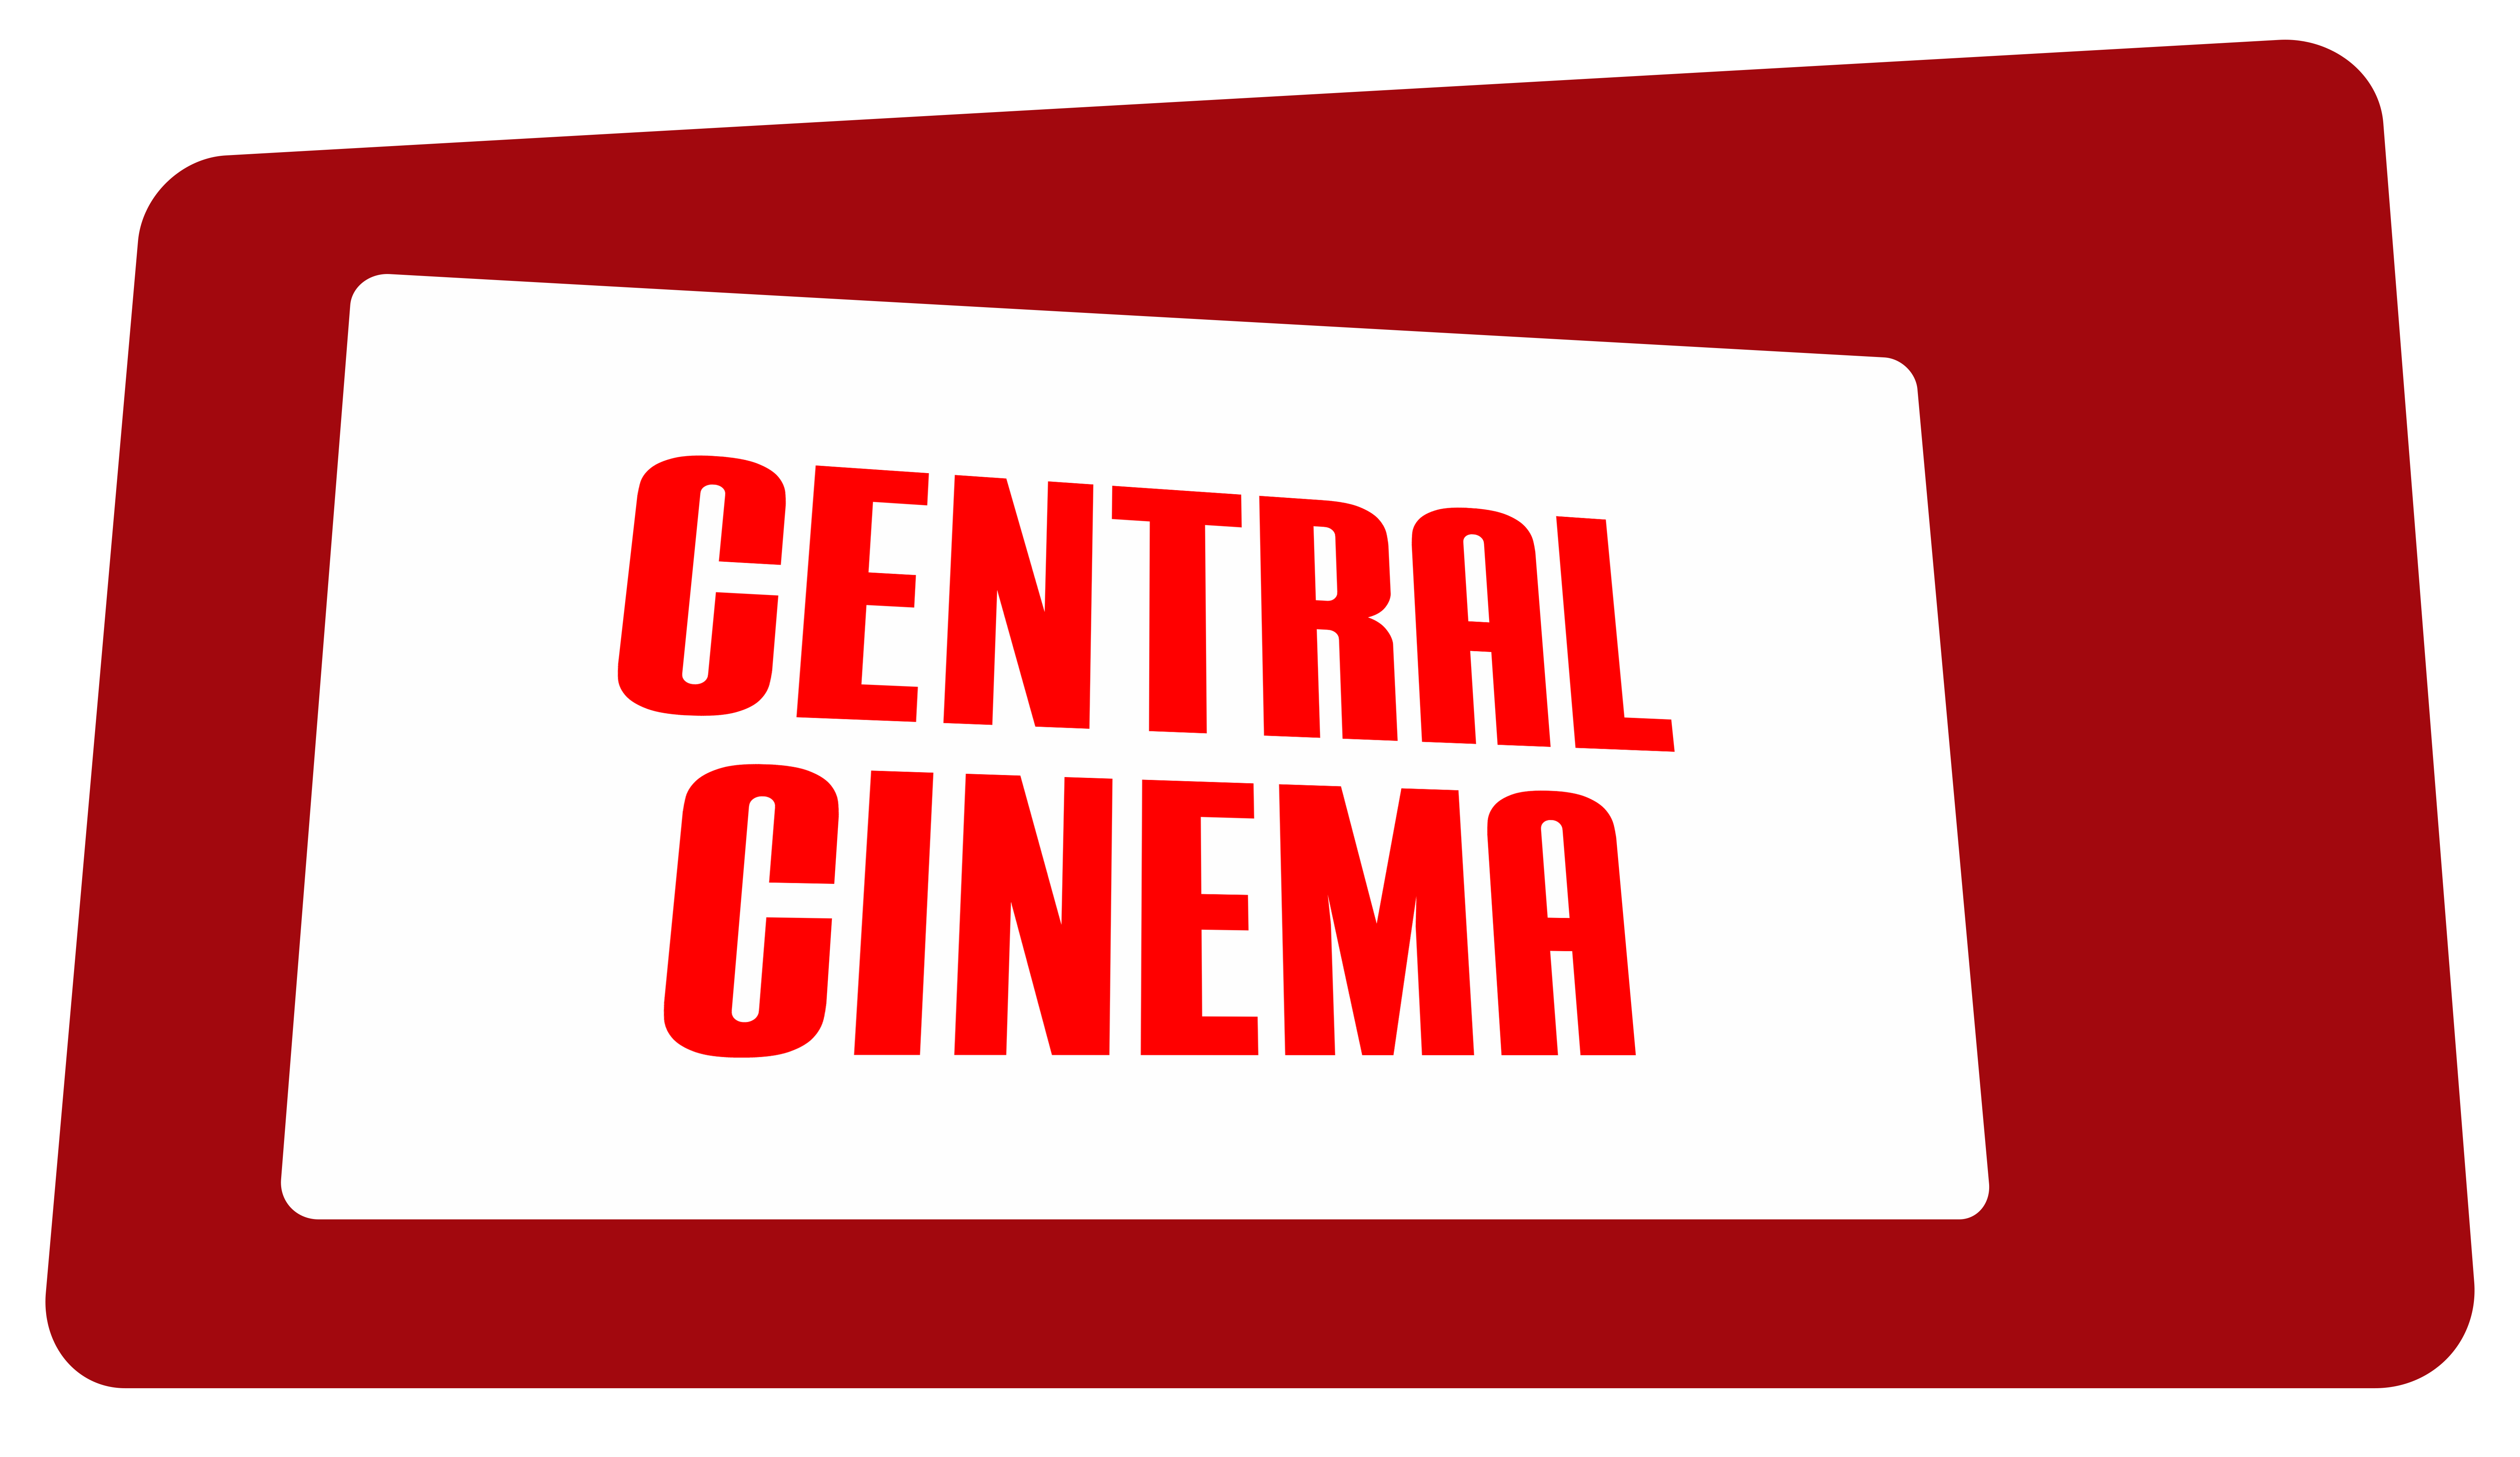 Central Cinema